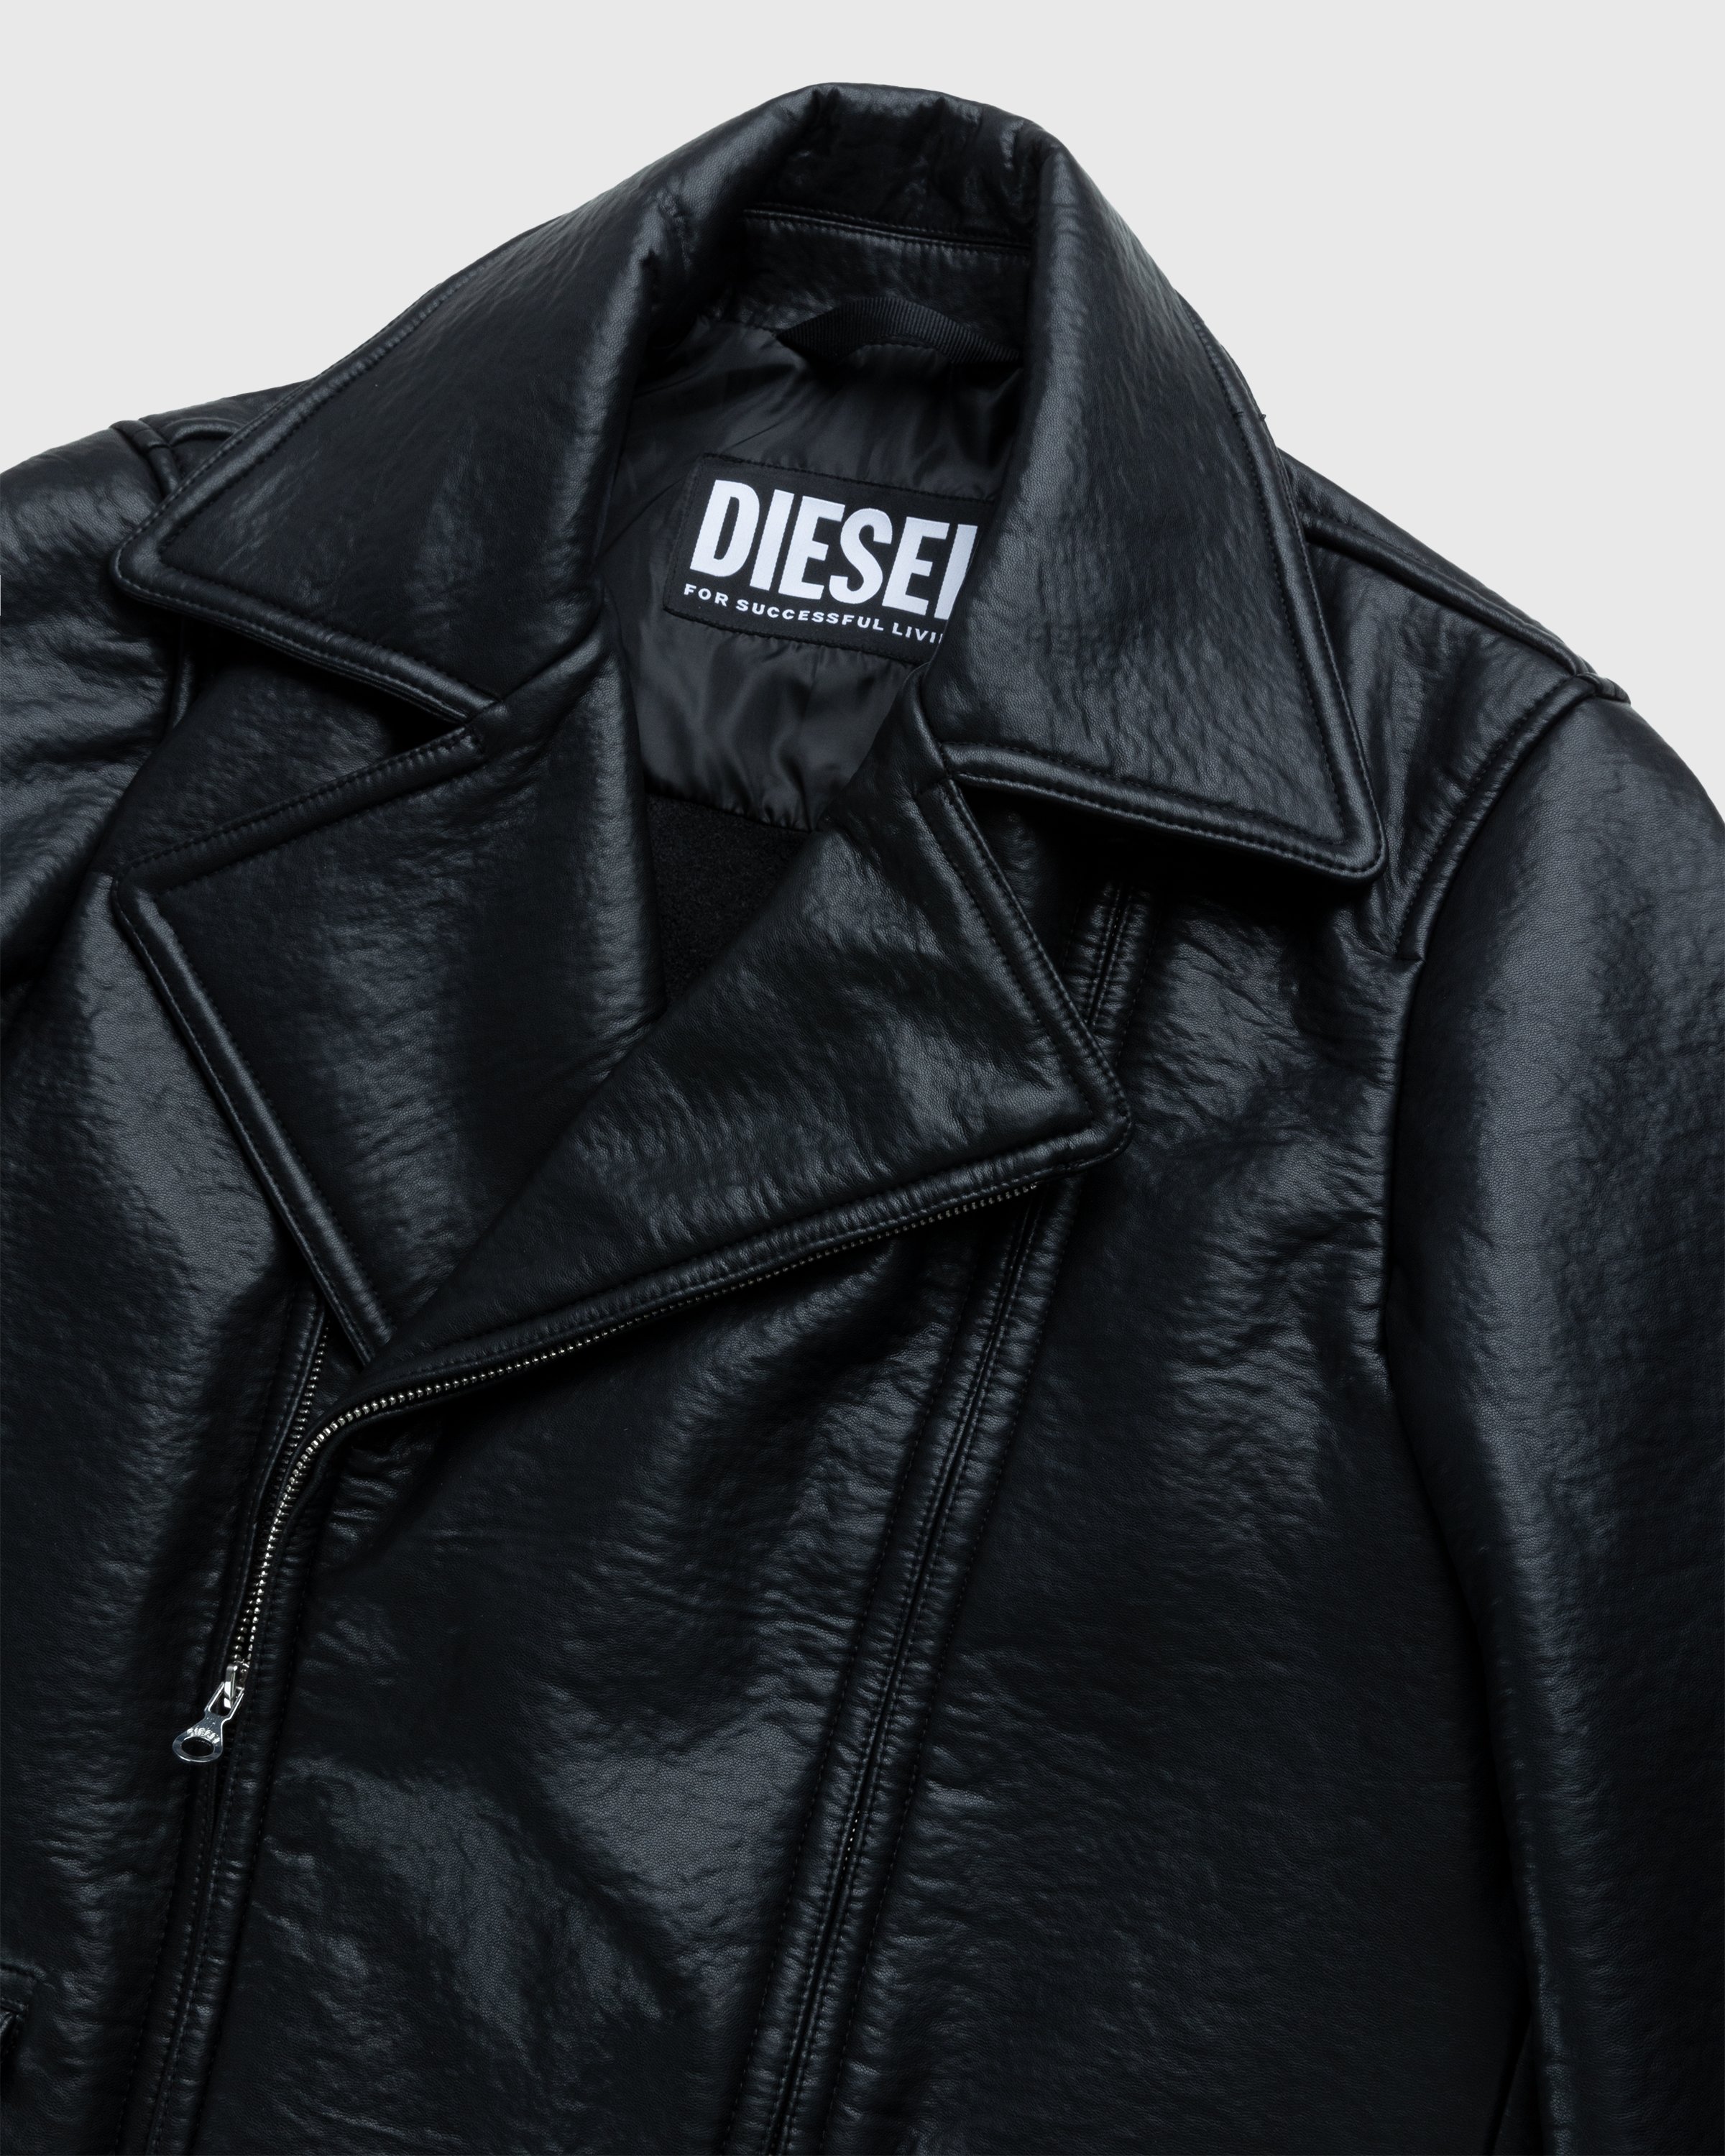 Diesel - Rego Biker Jacket Black - Clothing - Black - Image 3